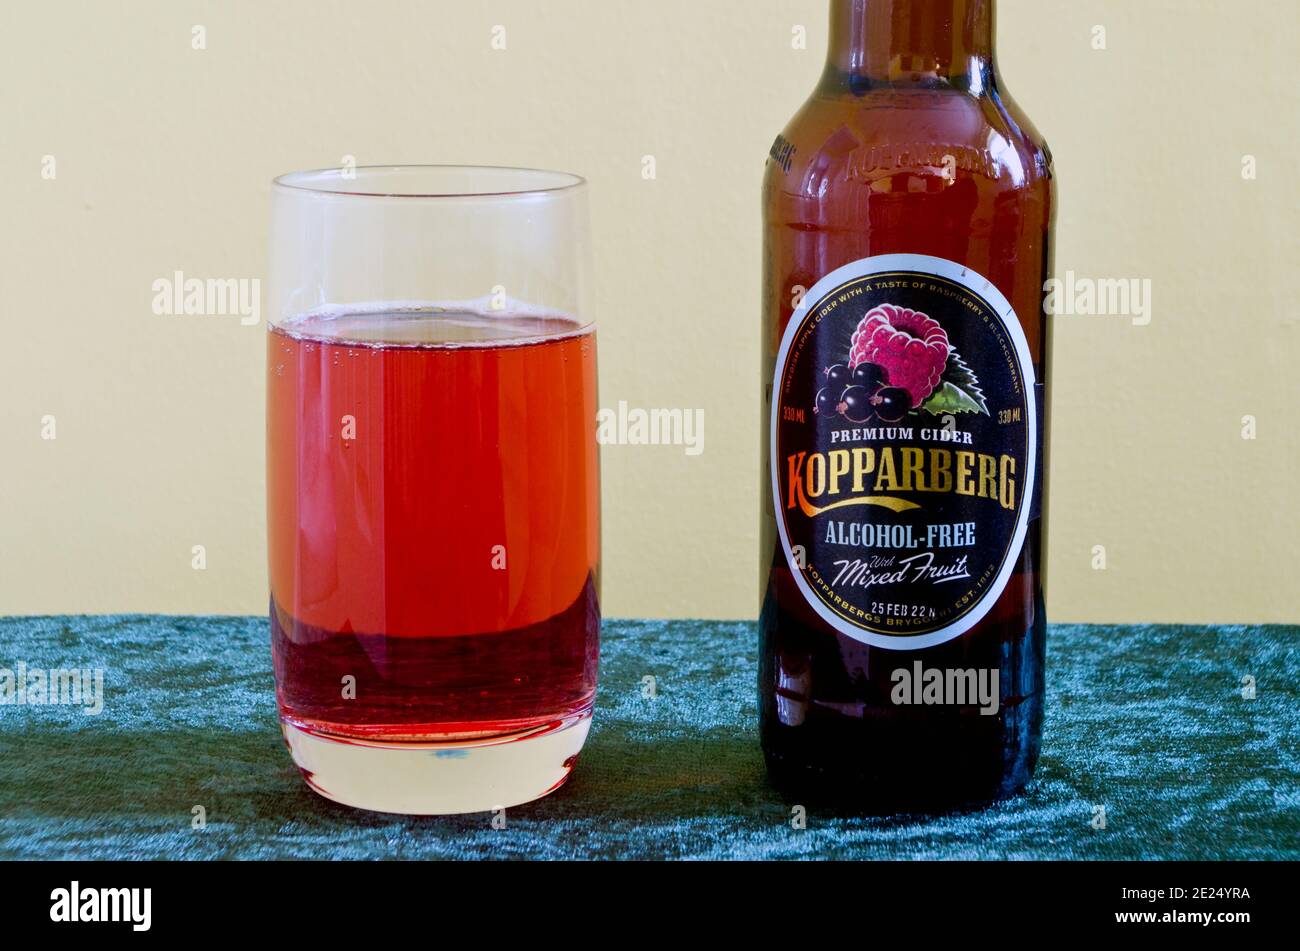 Bottle & Glass of Kopparberg Alcohol Free Mixed Fruit Premium Cider Stock Photo